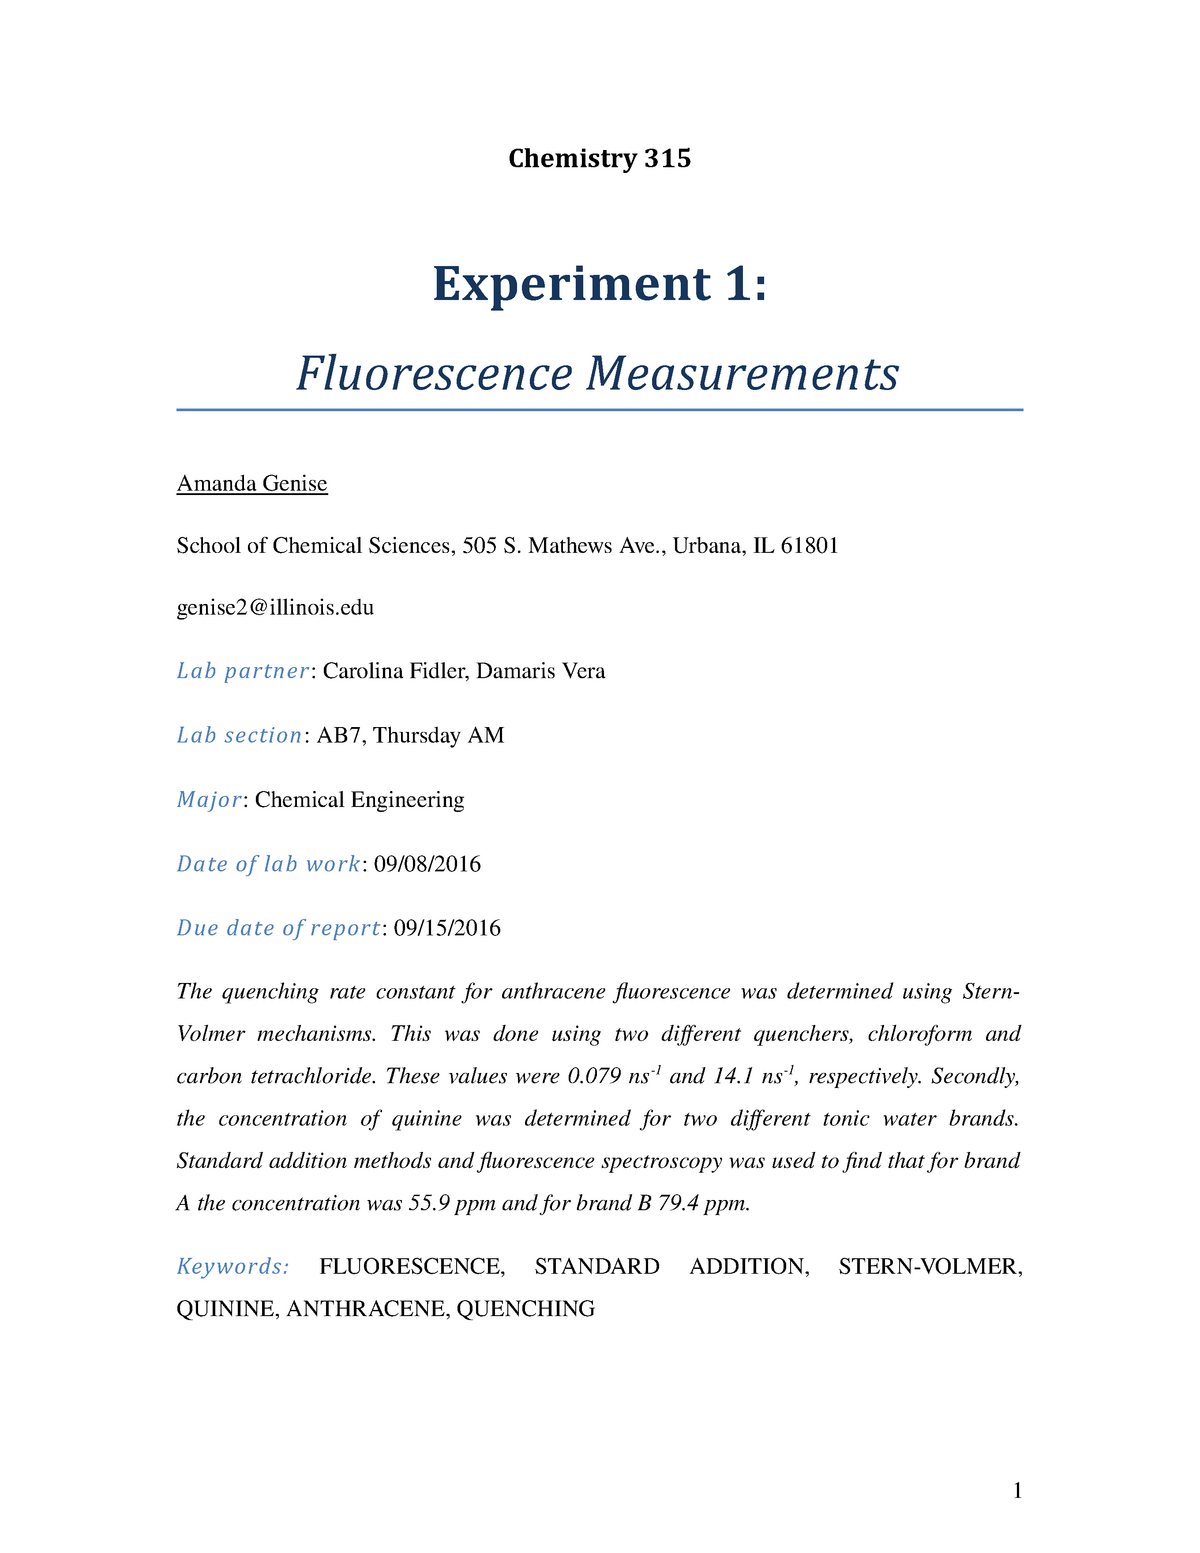 fluorescence spectroscopy lab report quinine